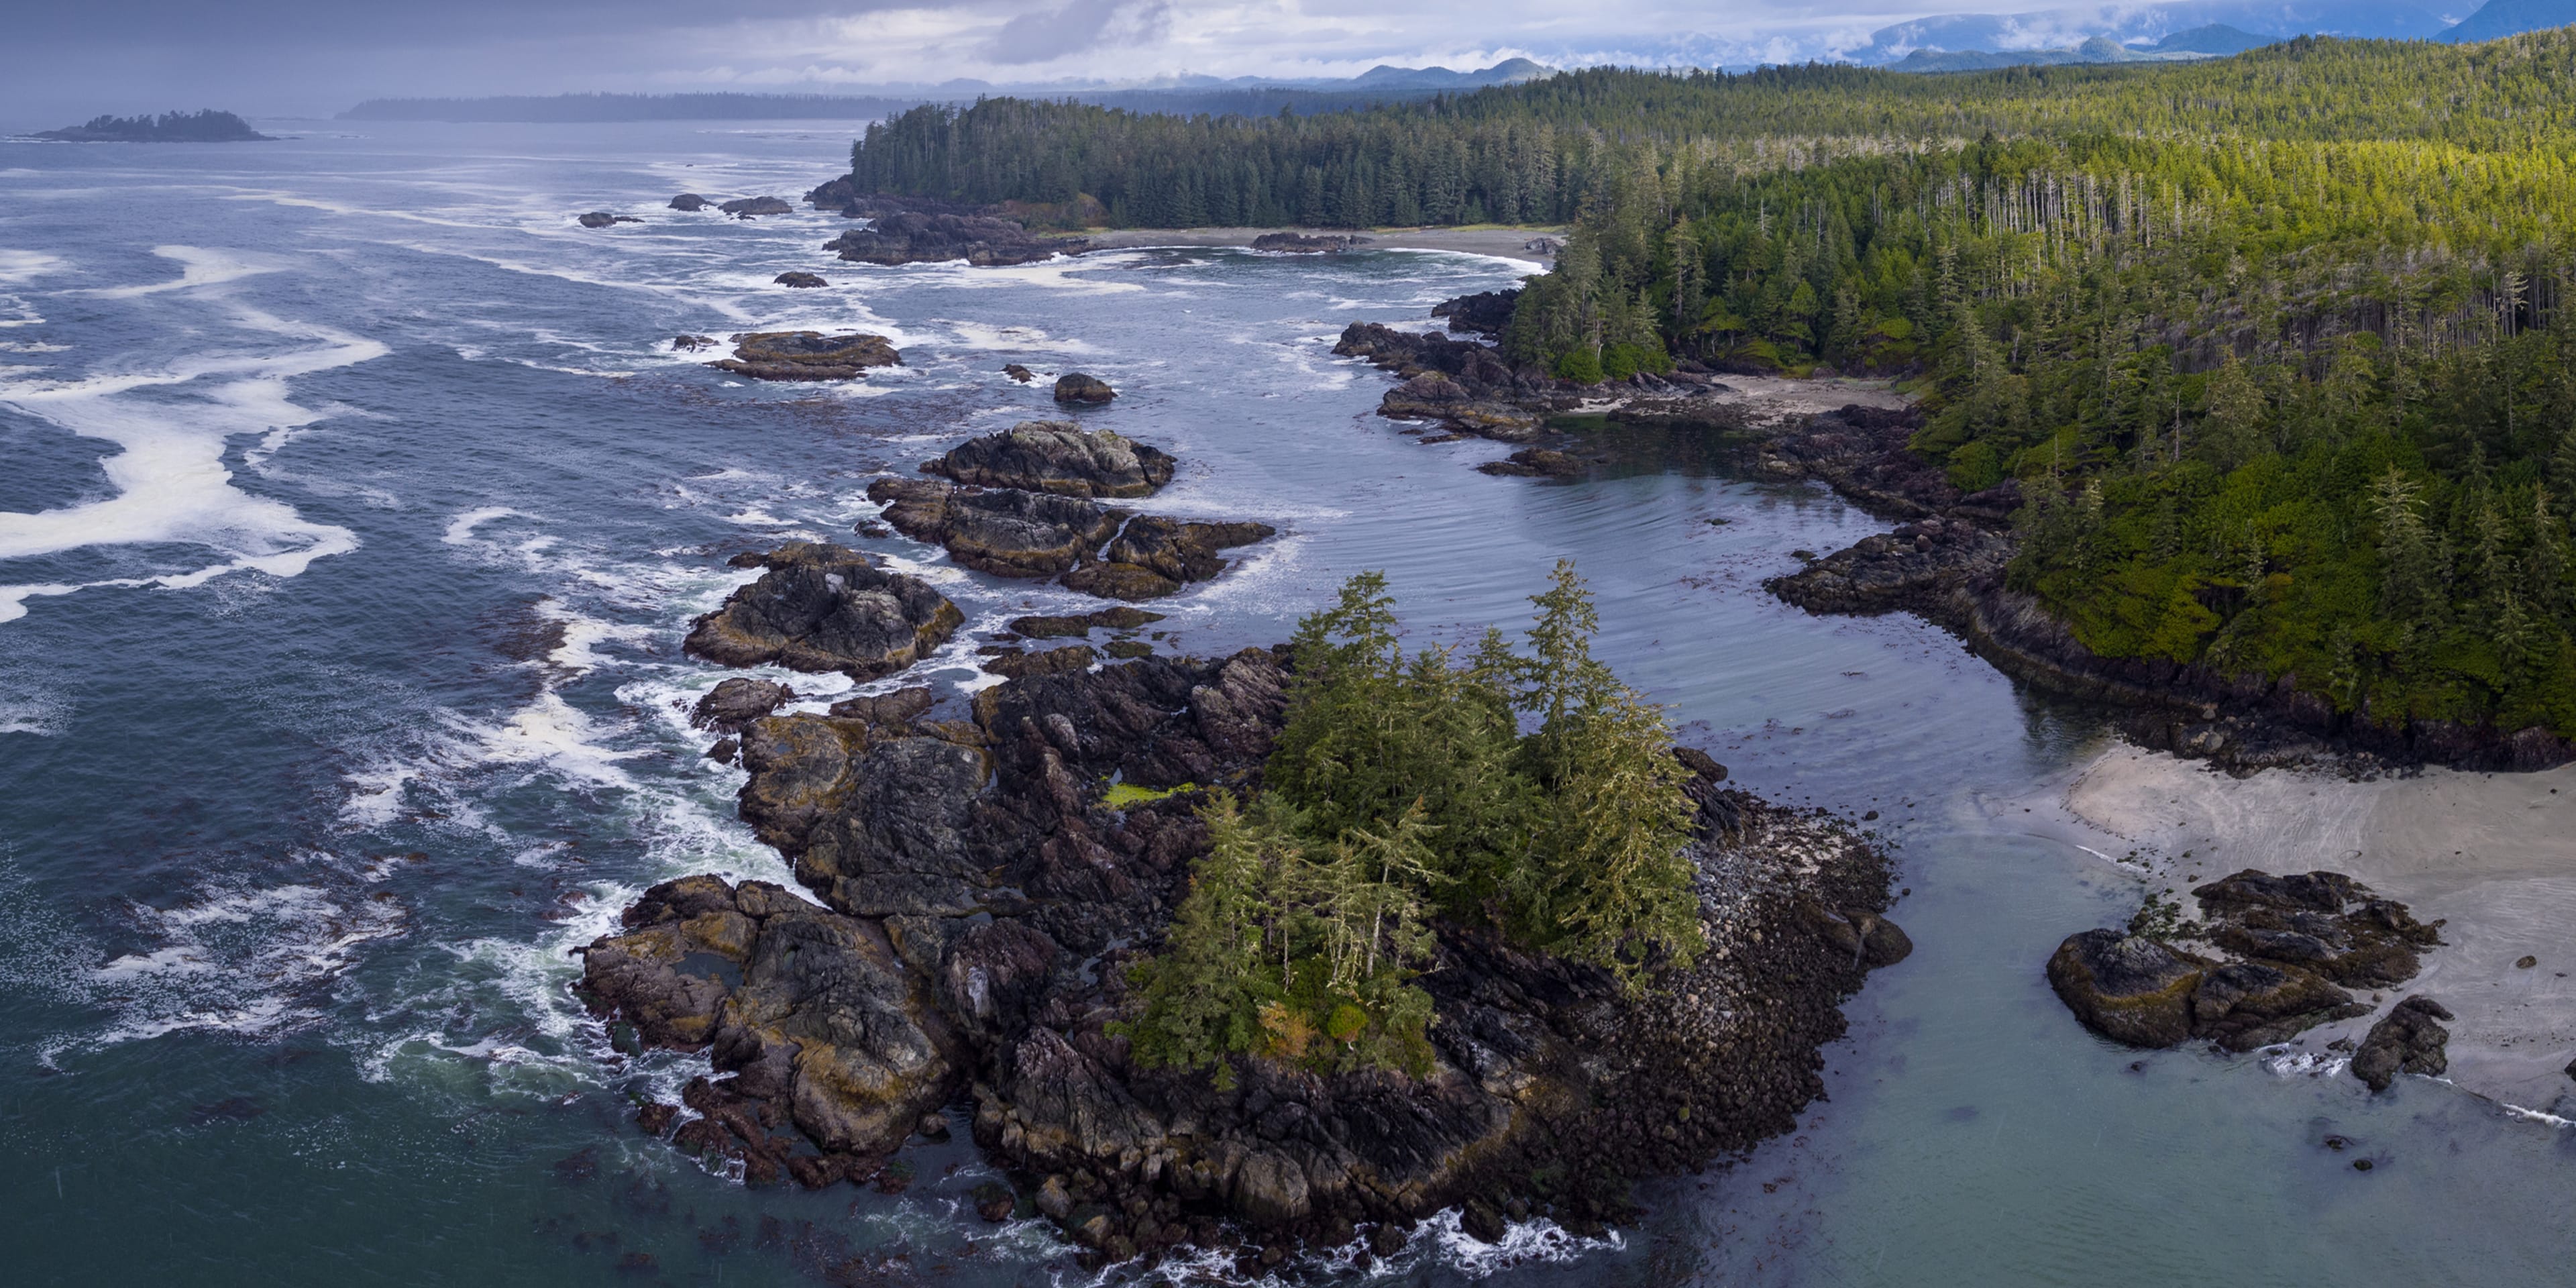 Island coast with pine trees on the coast of Vancouver Island